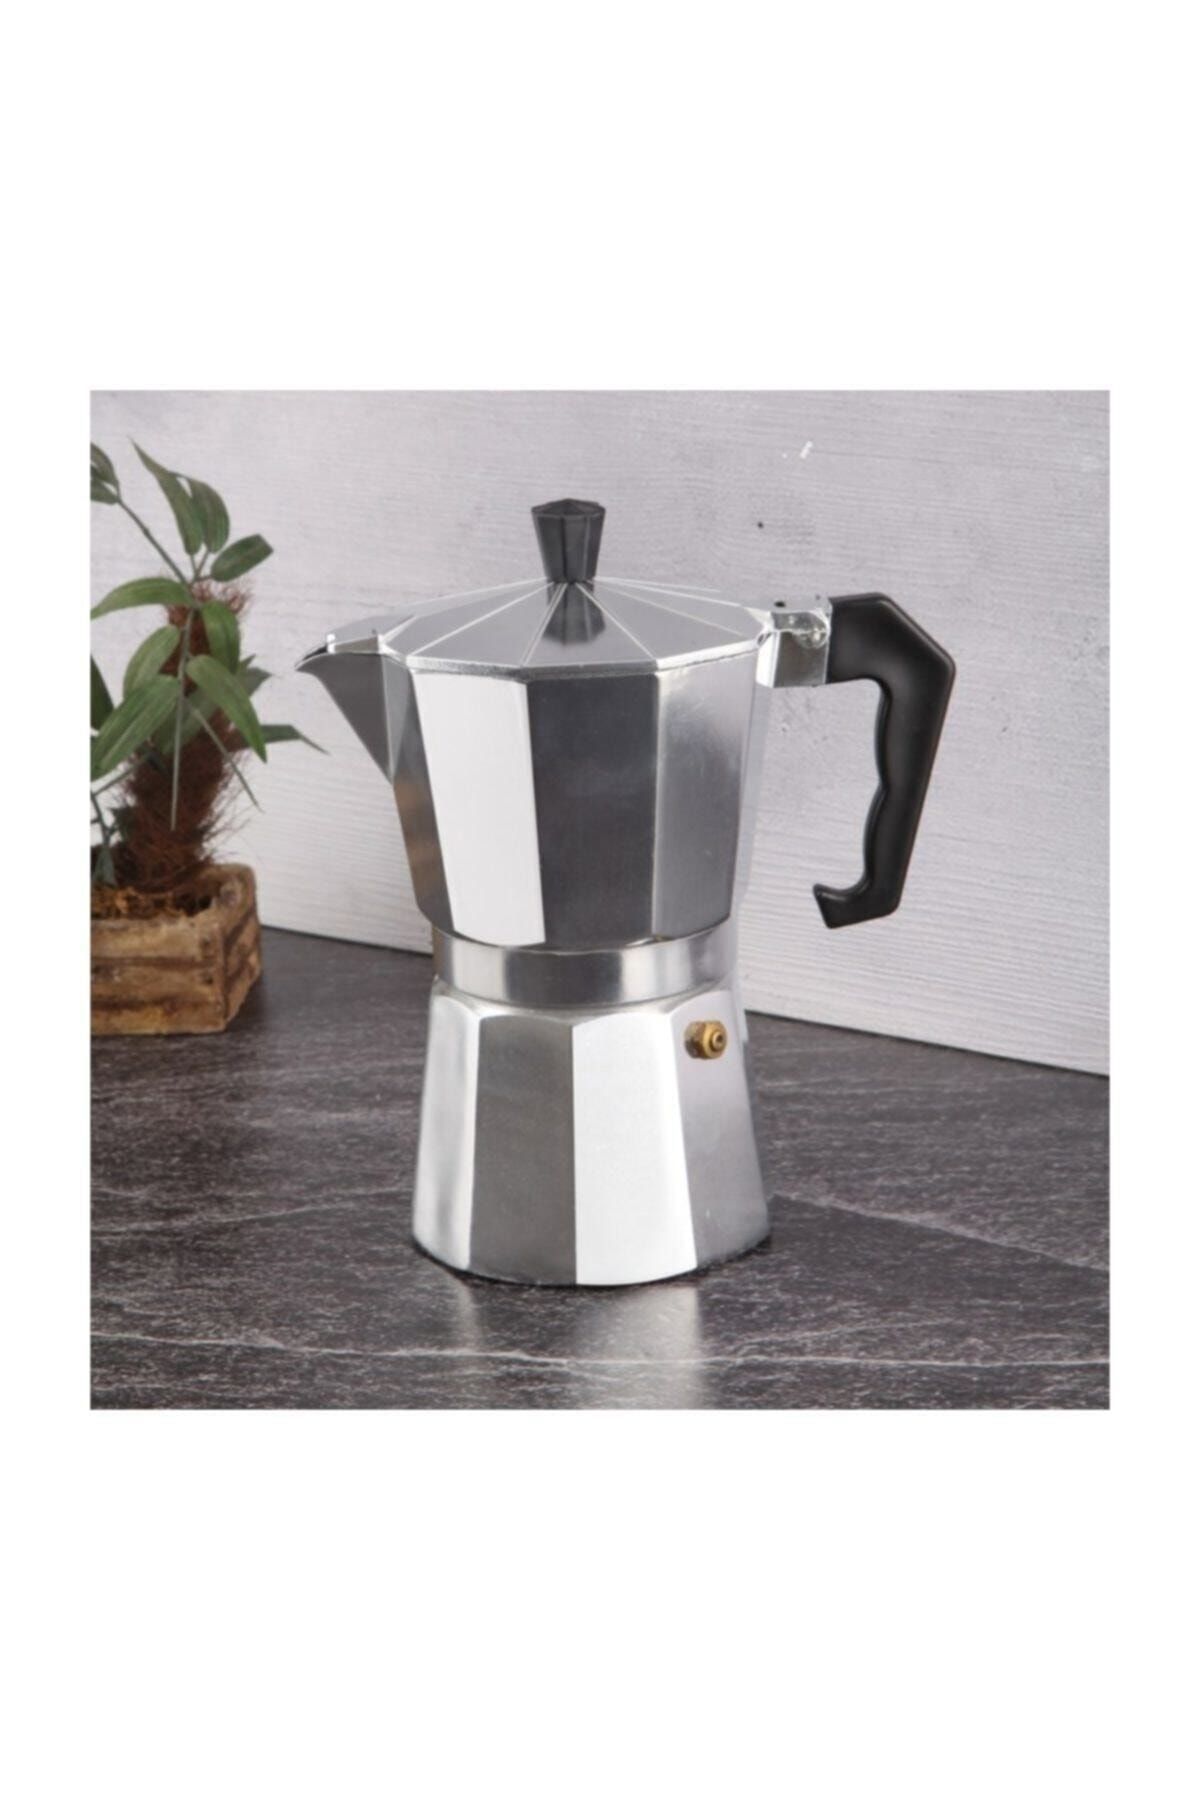 yeni11 Ocaküstü Moka Pot 6 Fincanlık Alüminyum Kahve Espresso Cezvesi.